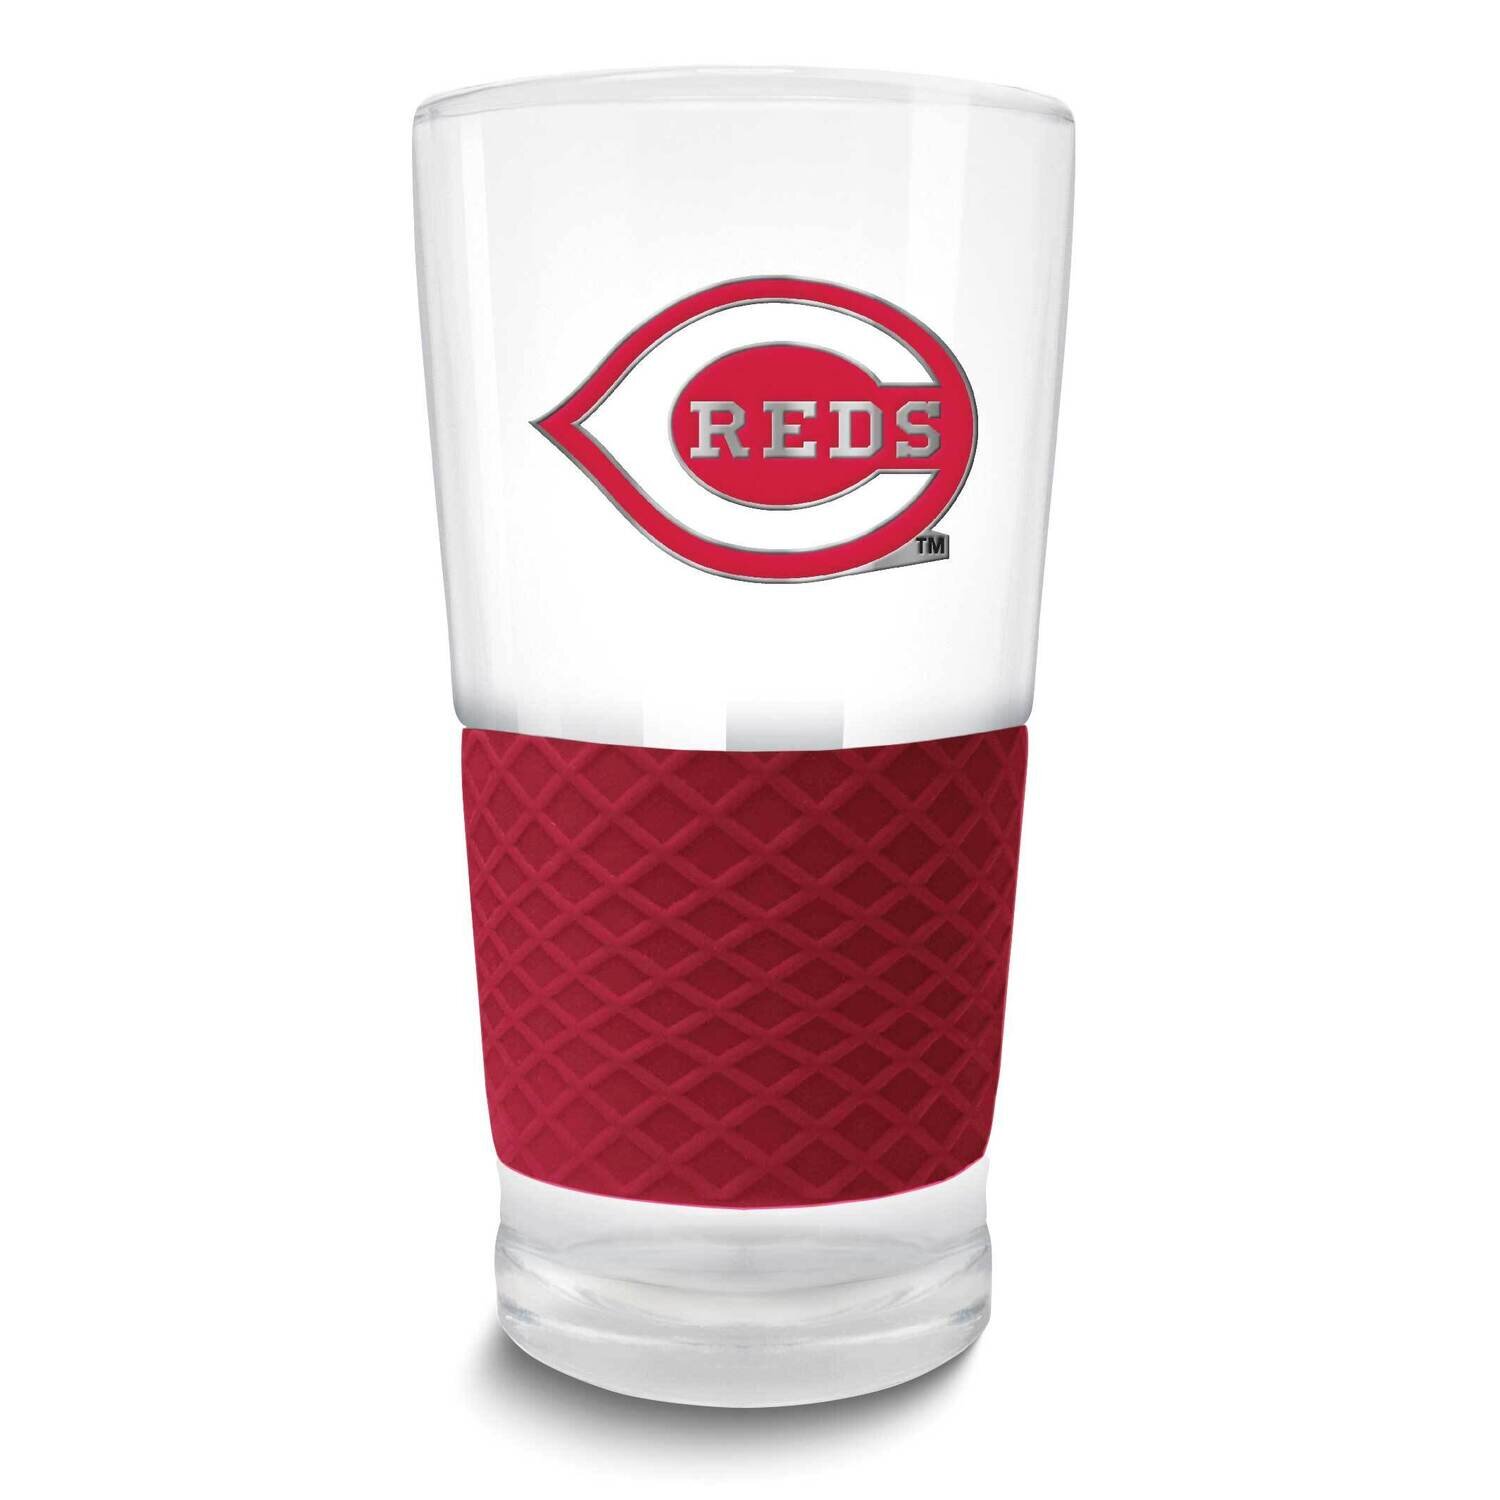 MLB Cincinnati Reds Score Pint Glass GM26127-RDS